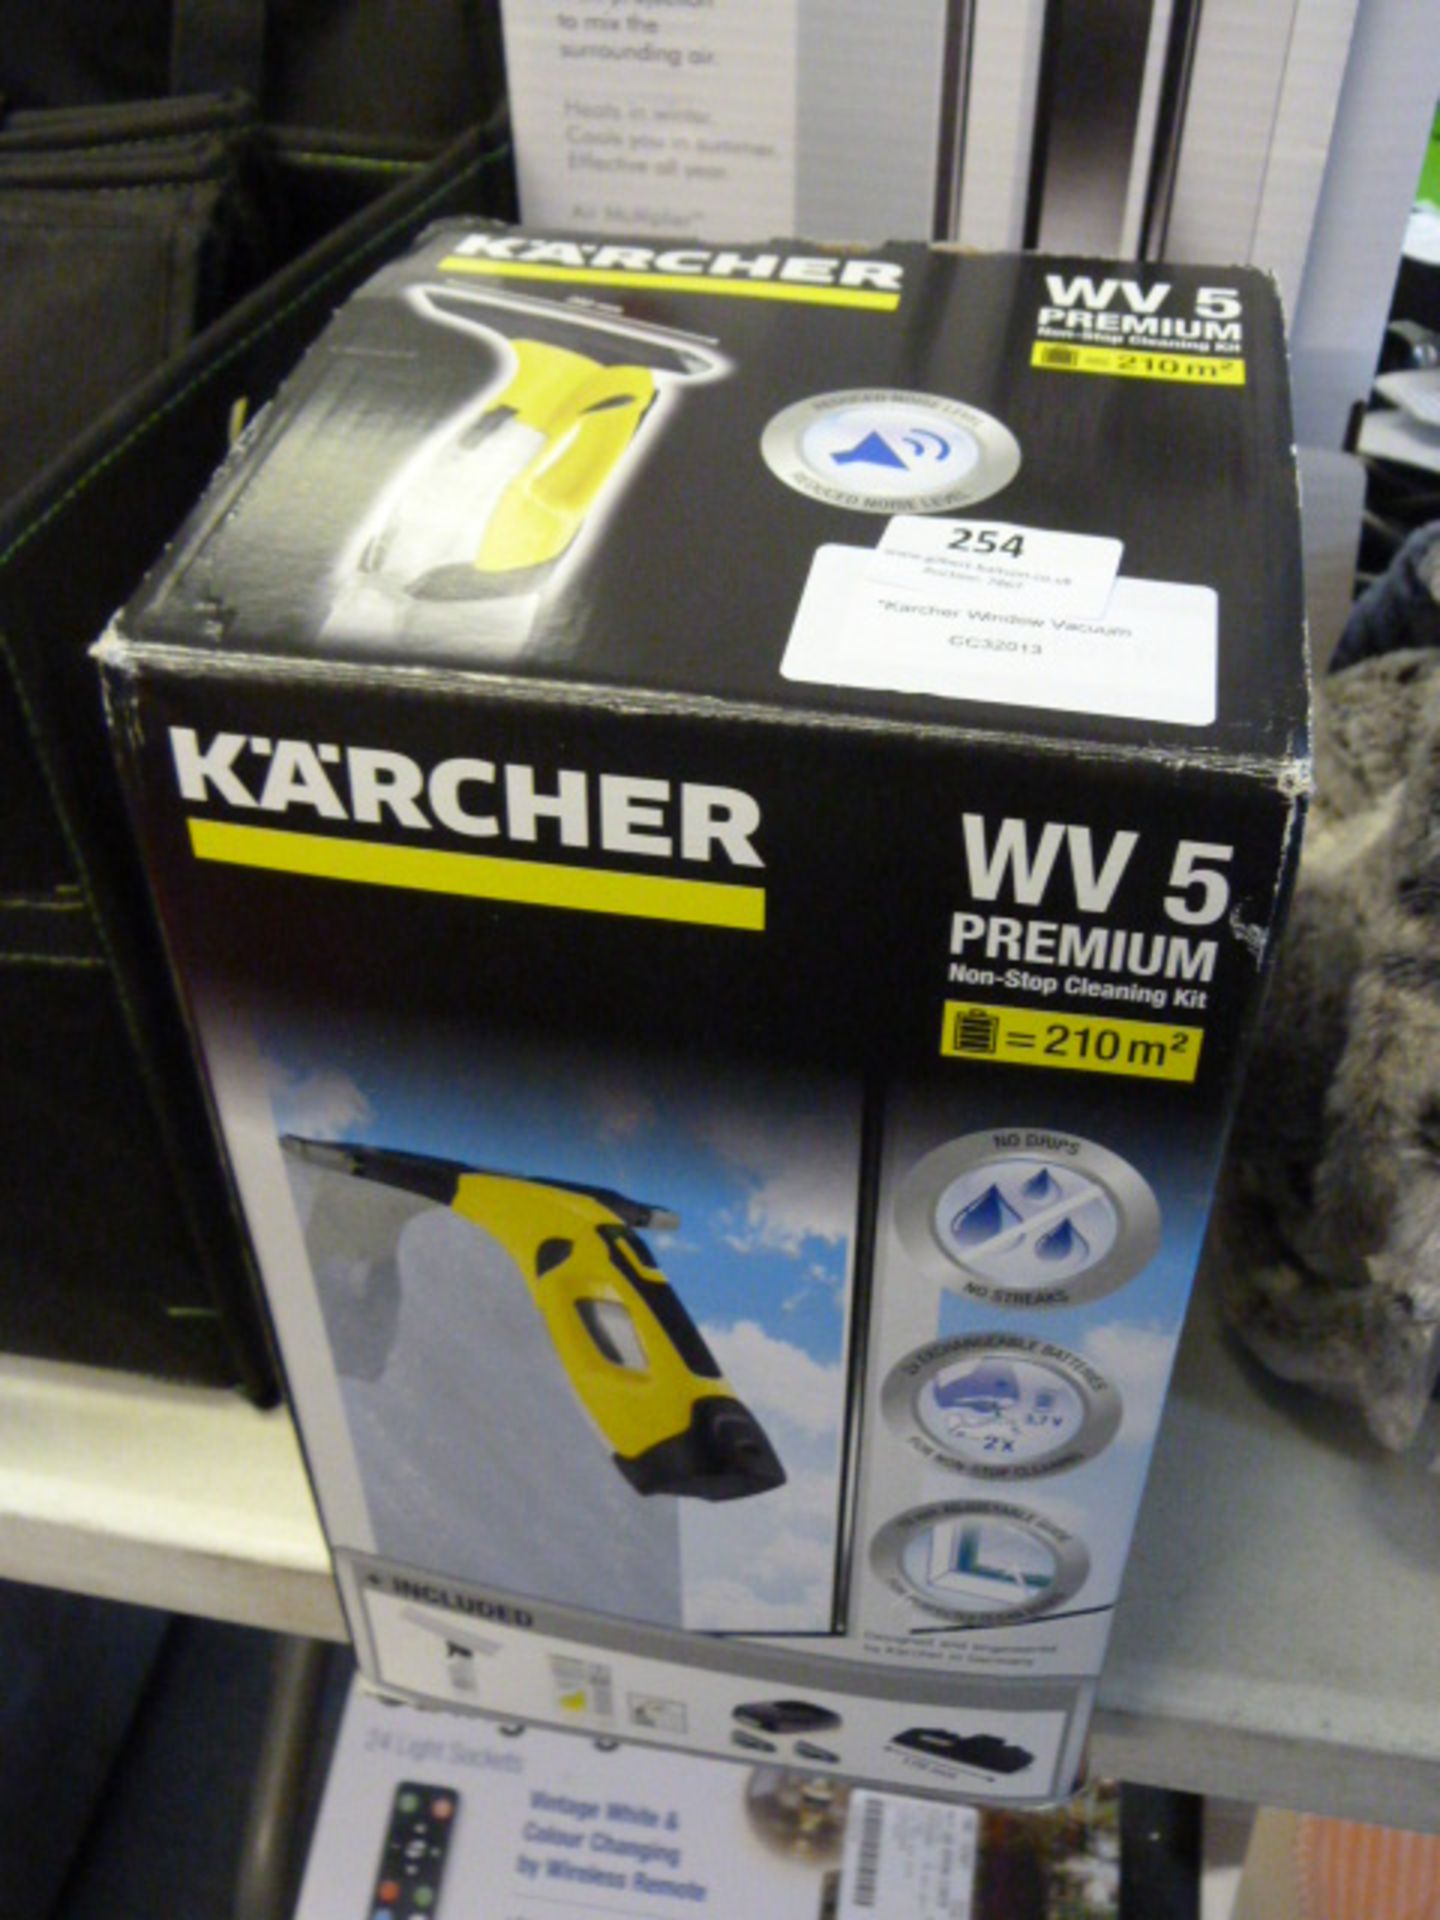 *Karcher Window Vacuum